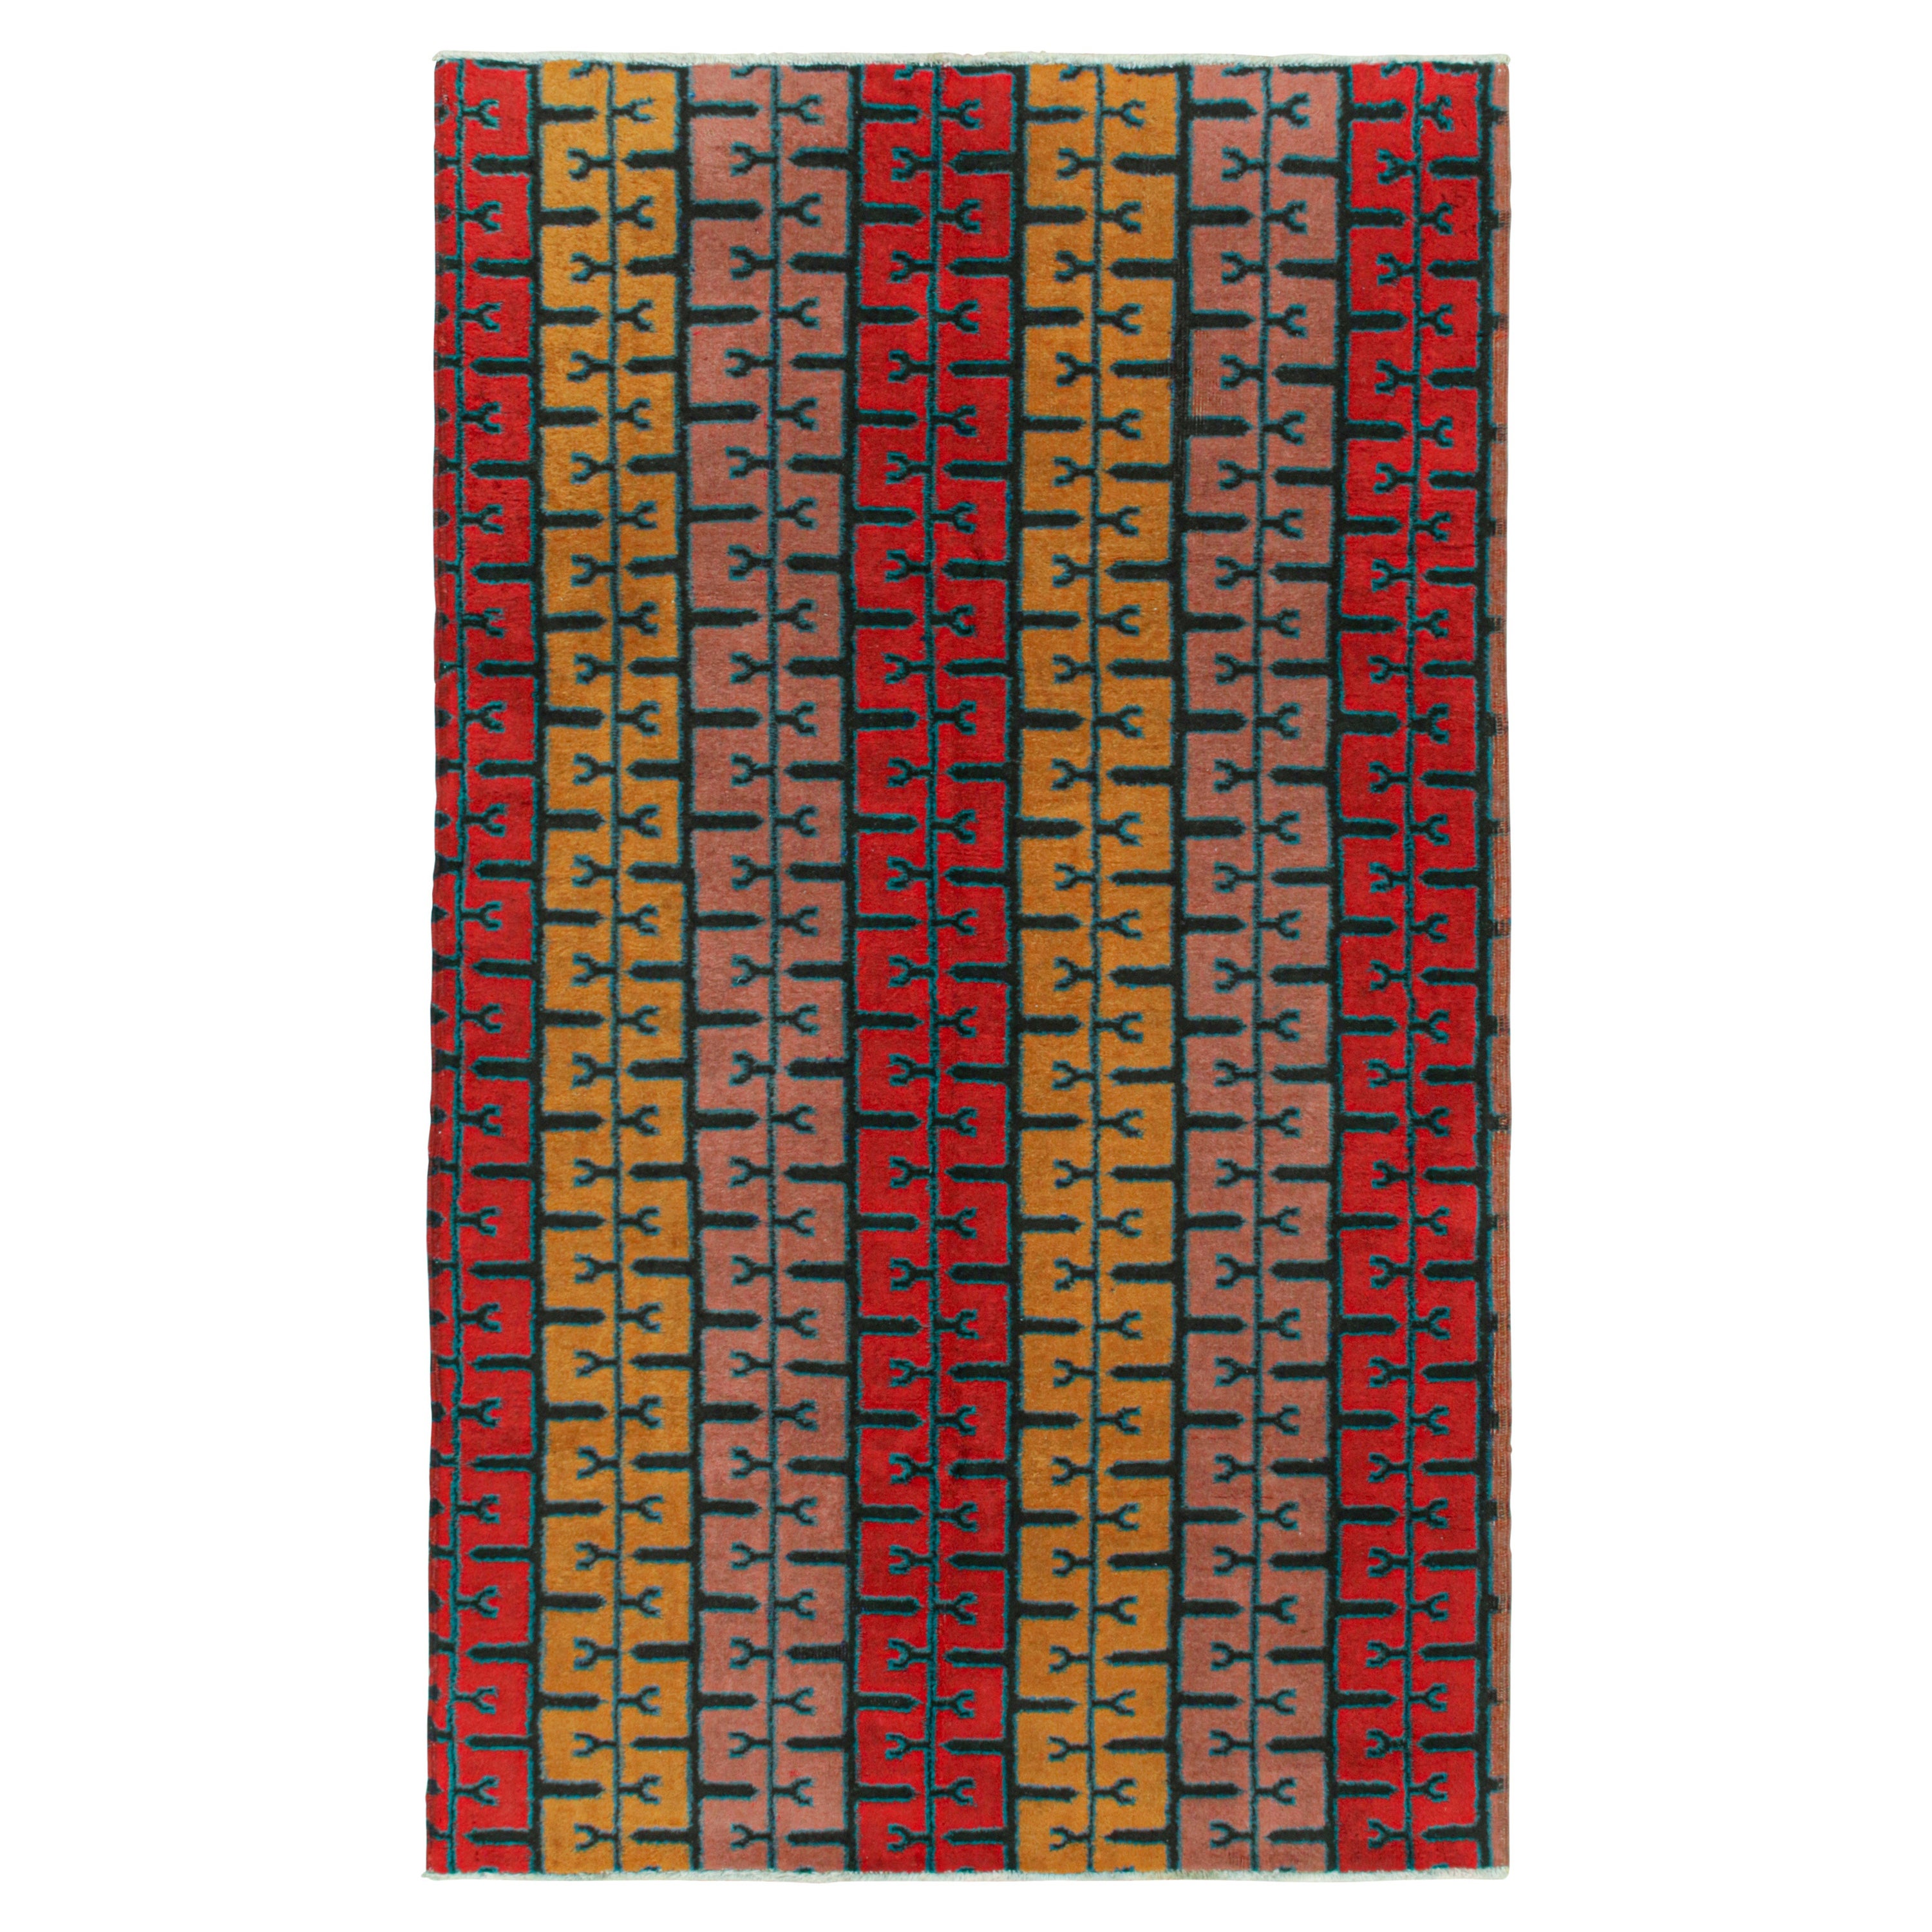 Vintage Zeki Müren Rug in Ochre, Red and Pink Geometric Patterns by Rug & Kilim